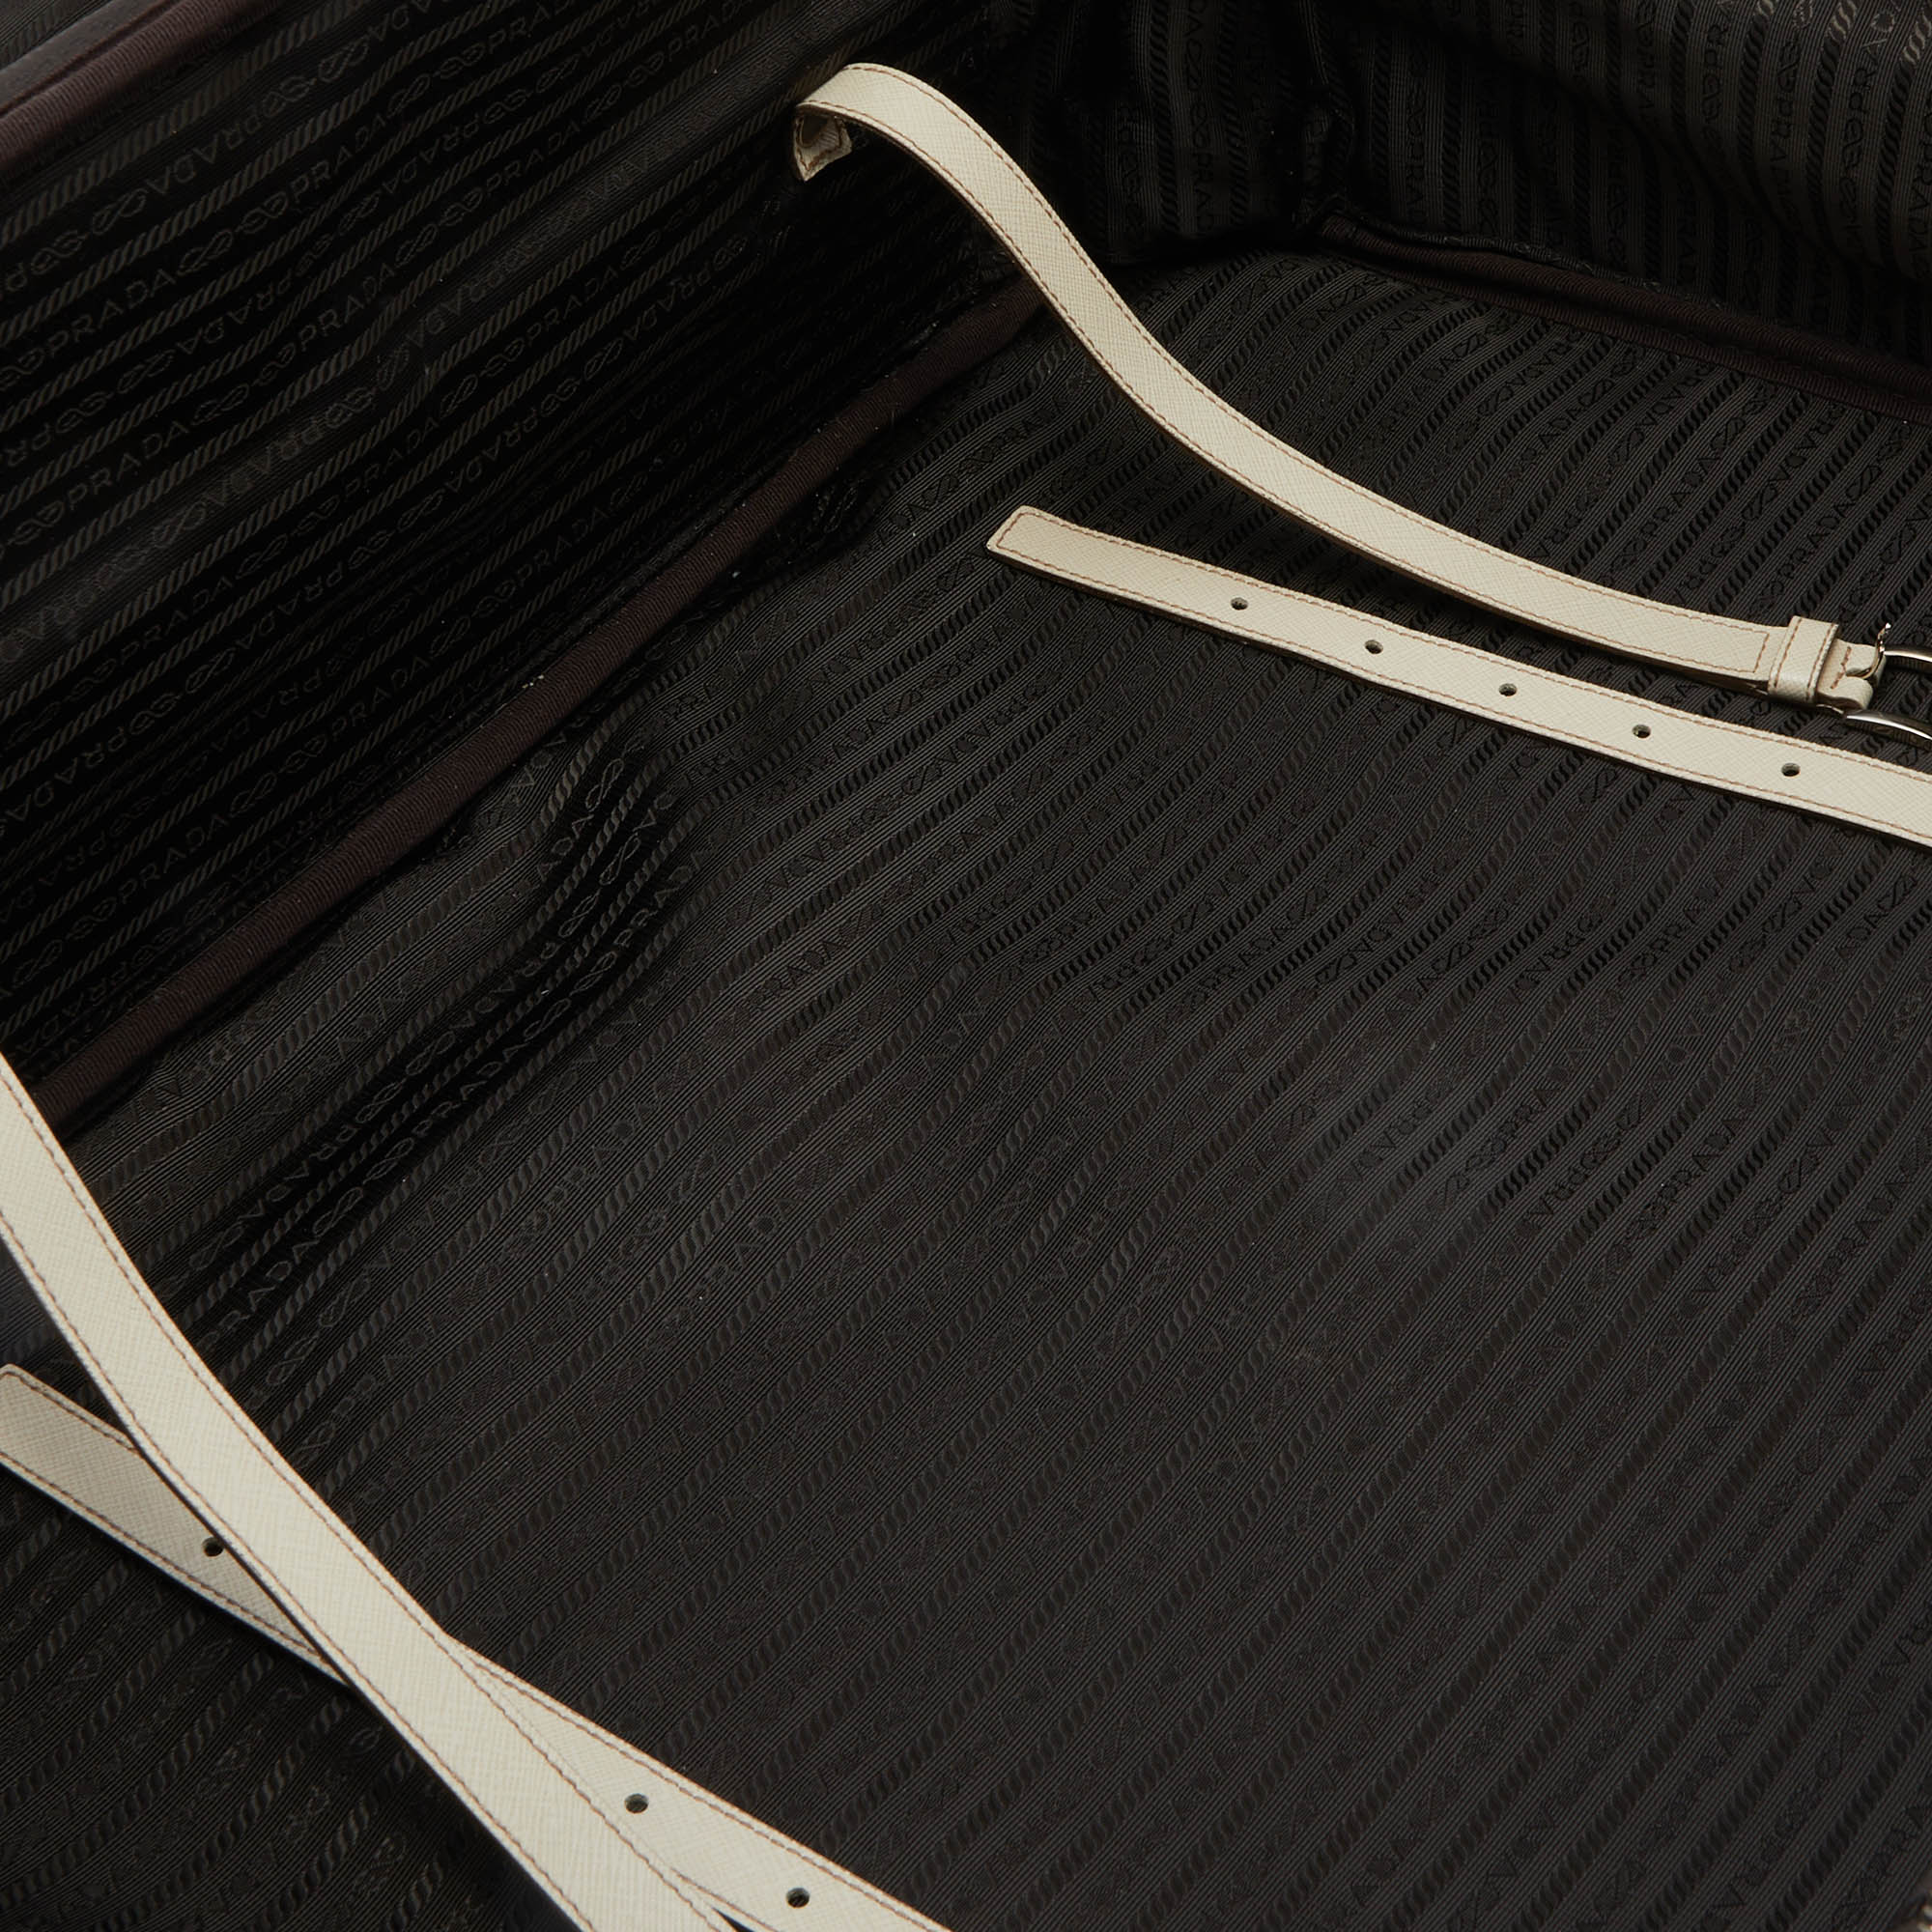 Prada Off White Saffiano Travel Valigia Suitcase